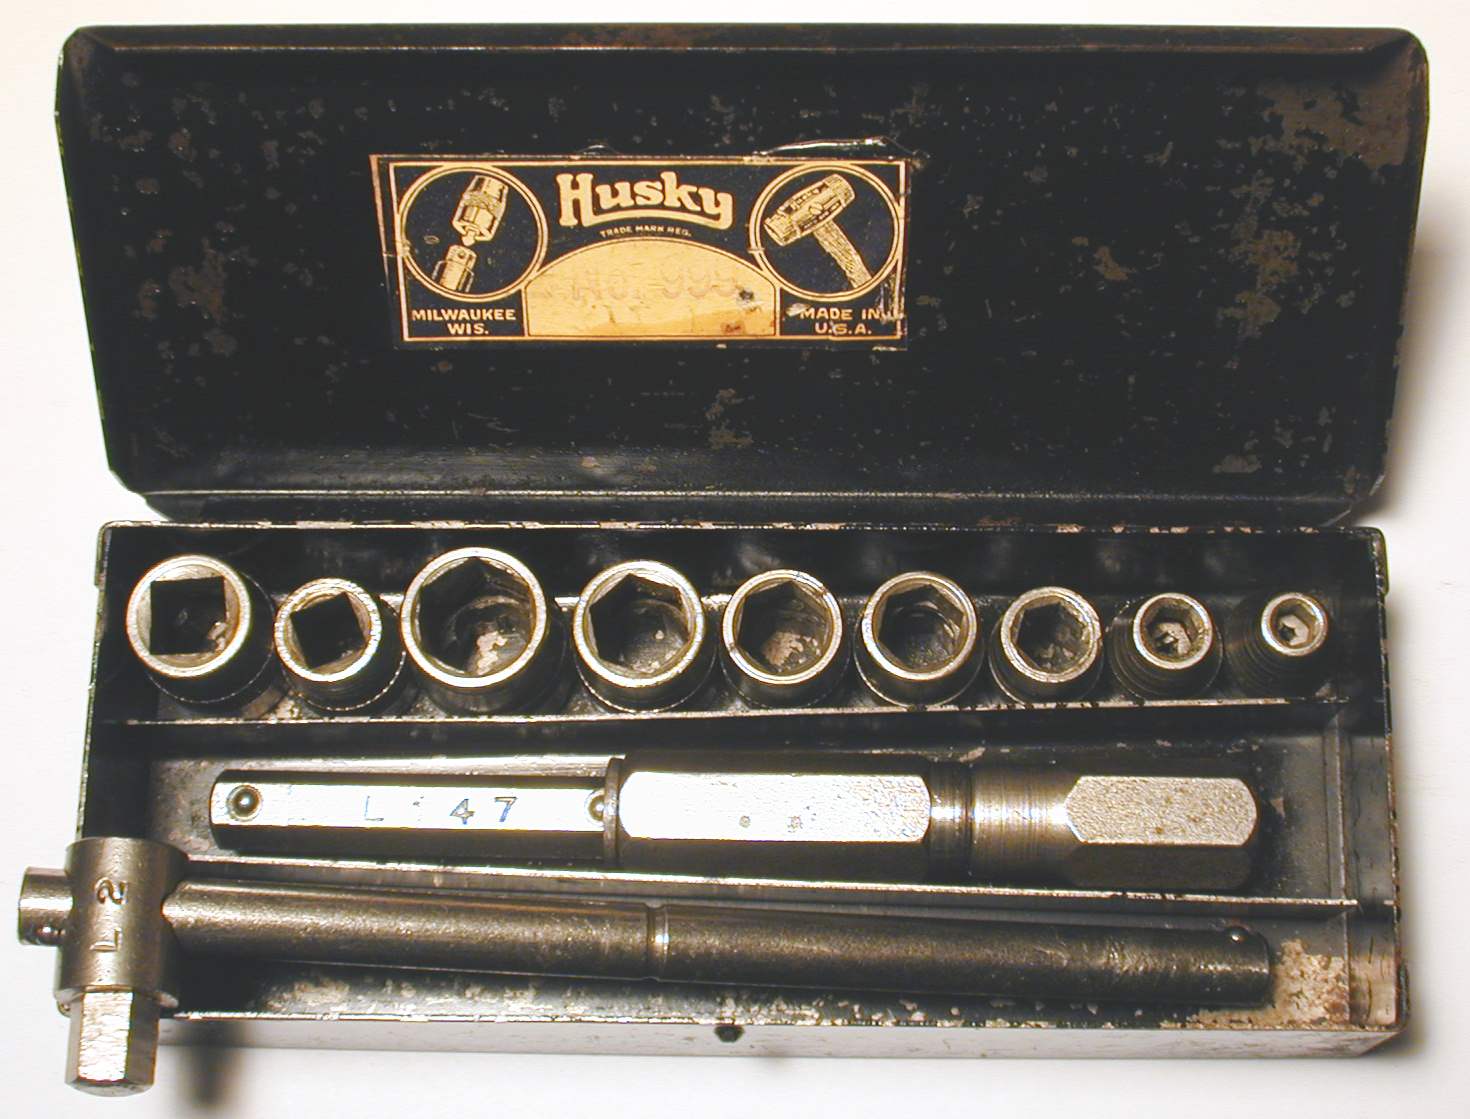 Husky Wrench, The Common Sense Tool Company